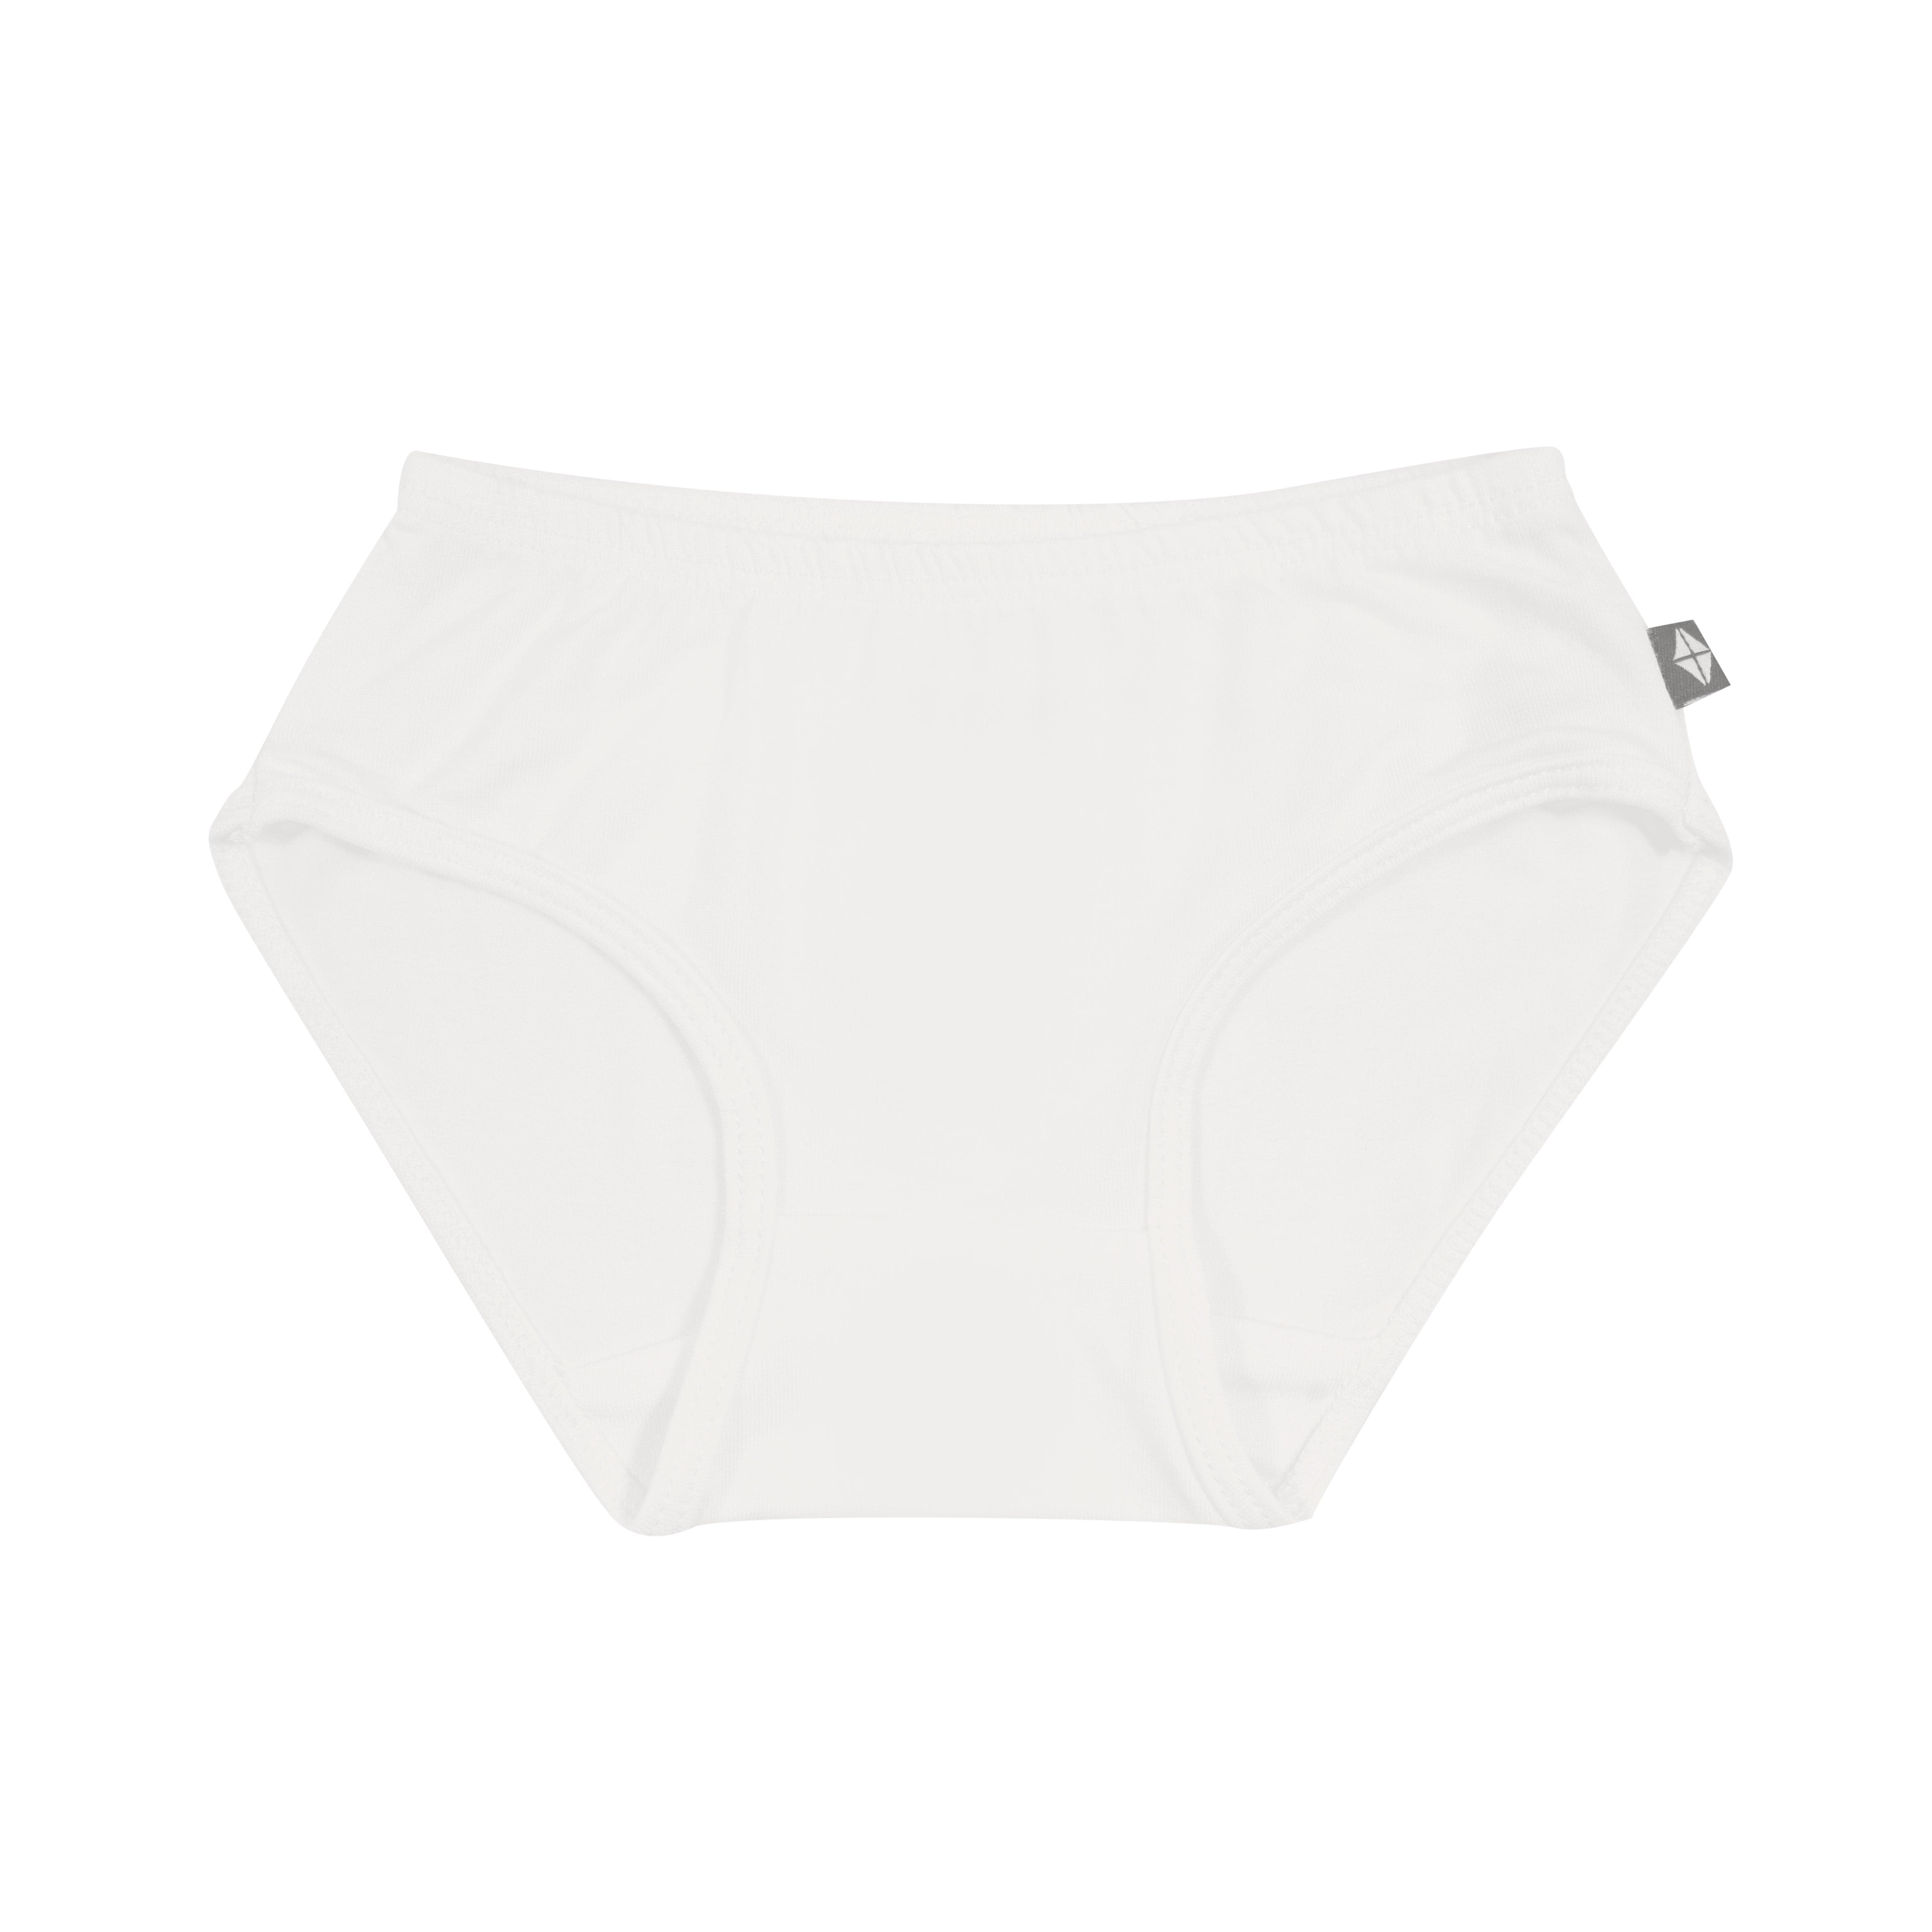 Roslyn_WeberTEx on X: Orinery Baby Kids Underwear Breathable Cotton Panties  Toddler Girls Undies Soft Assorted Briefs 6-Pack SICKL2X    / X